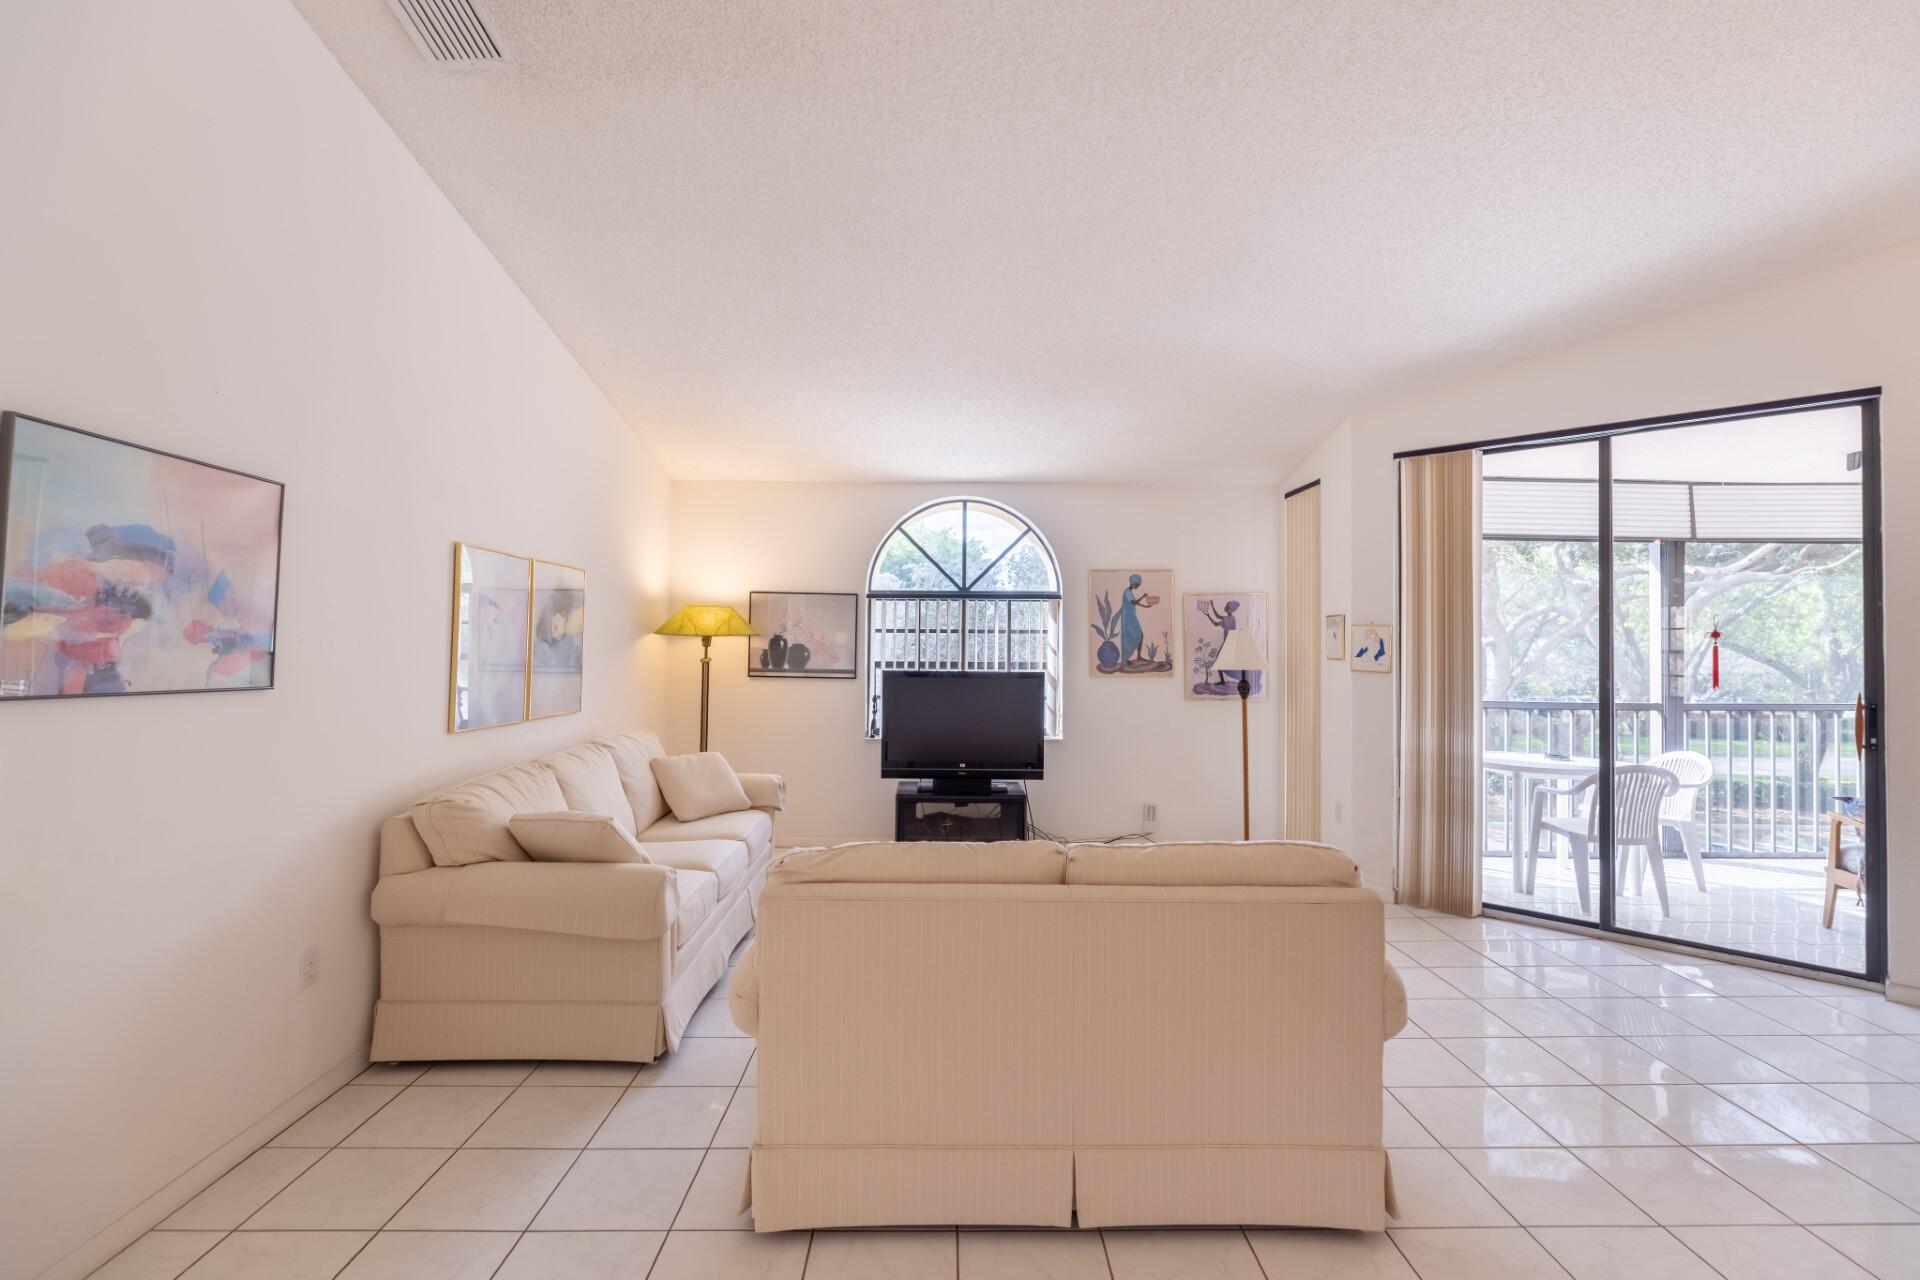 Property for Sale at 5107 Europa Drive N, Boynton Beach, Palm Beach County, Florida - Bedrooms: 3 
Bathrooms: 2  - $295,000